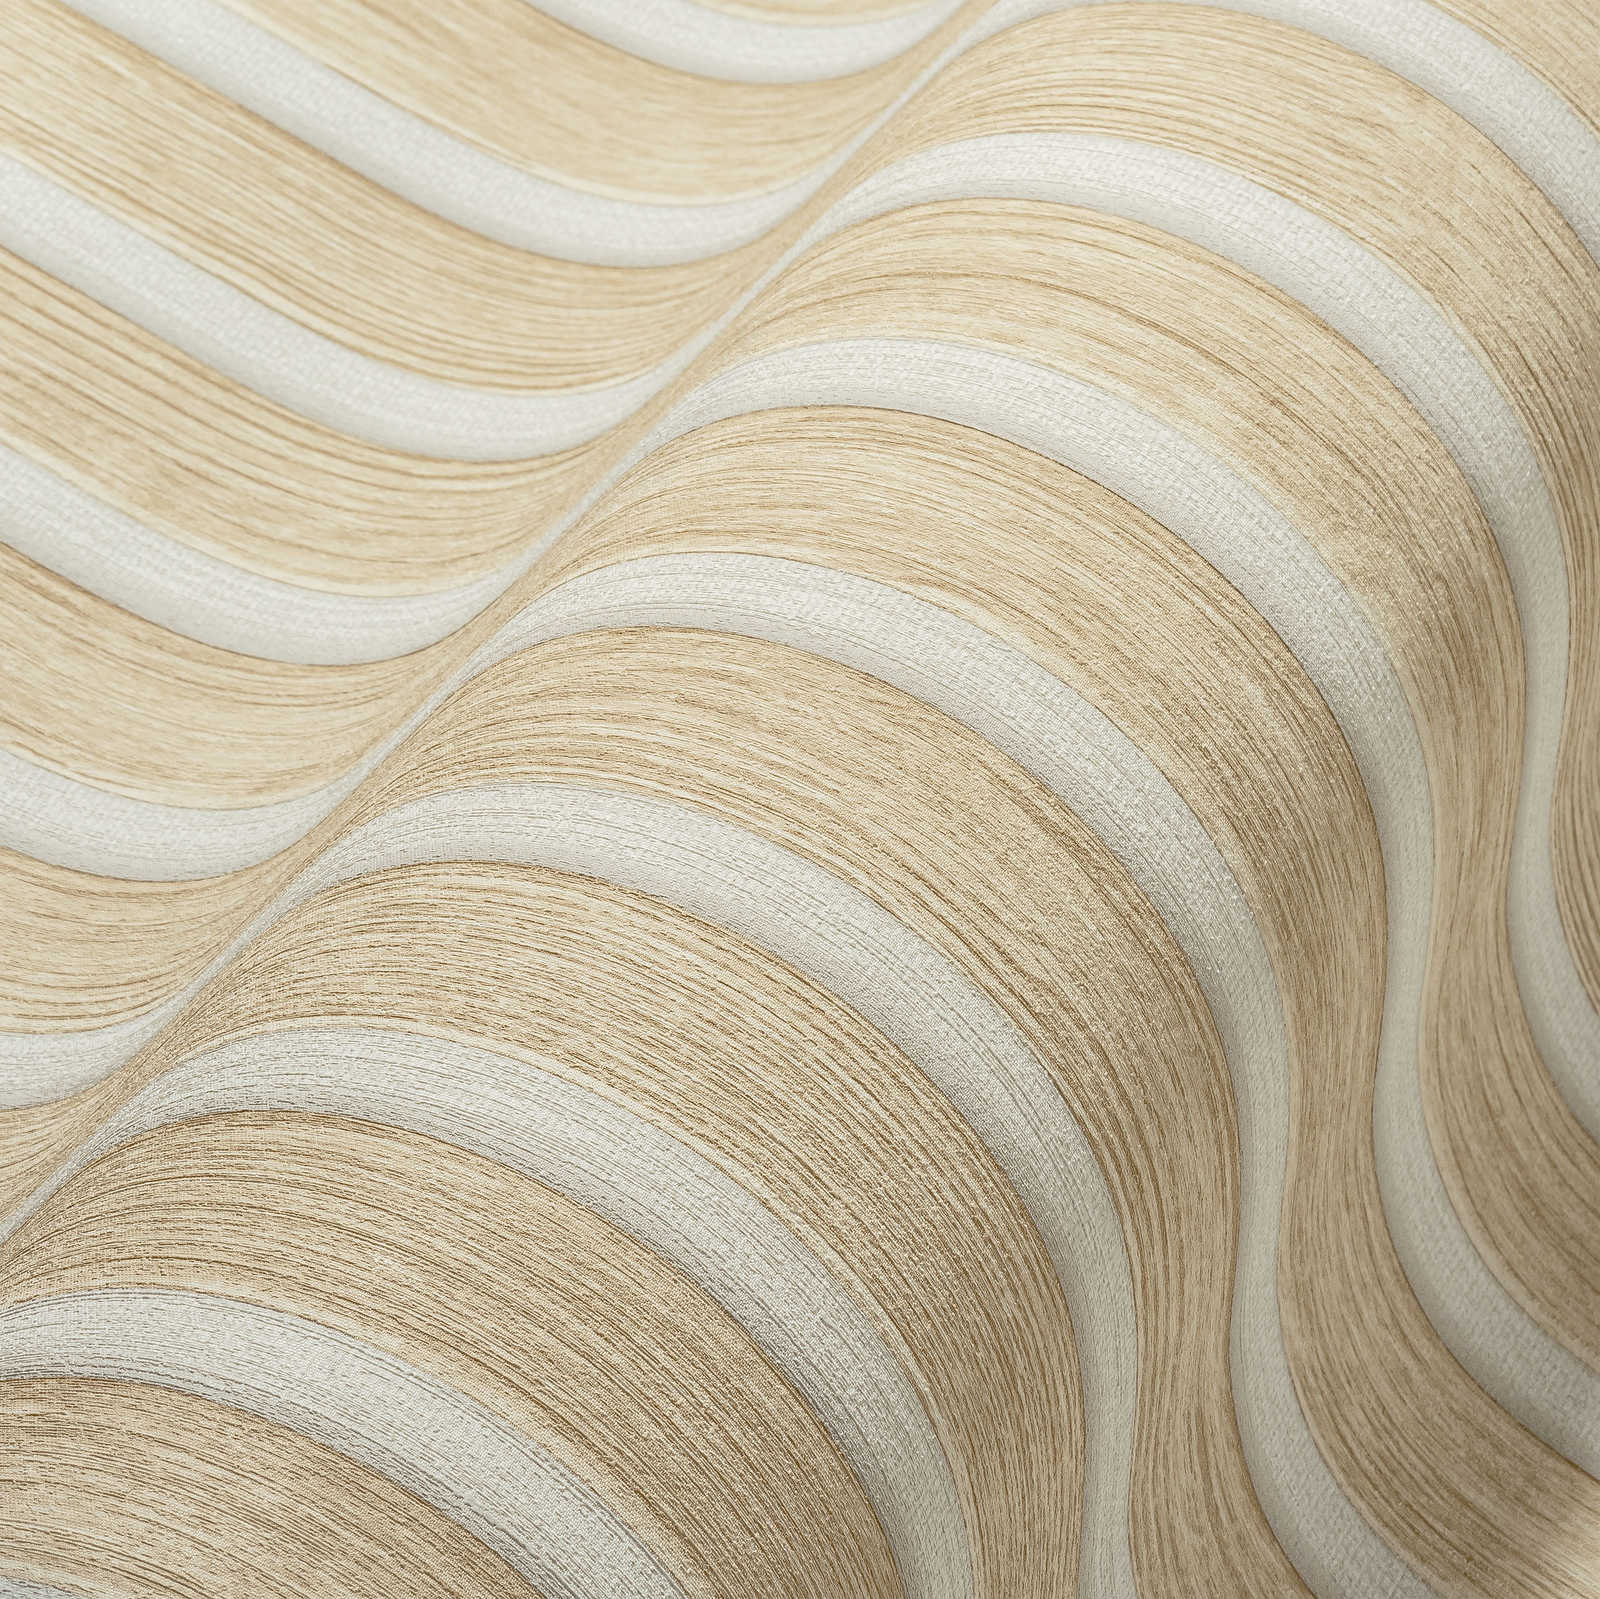             Wooden wallpaper in acoustic panel look - beige, white
        